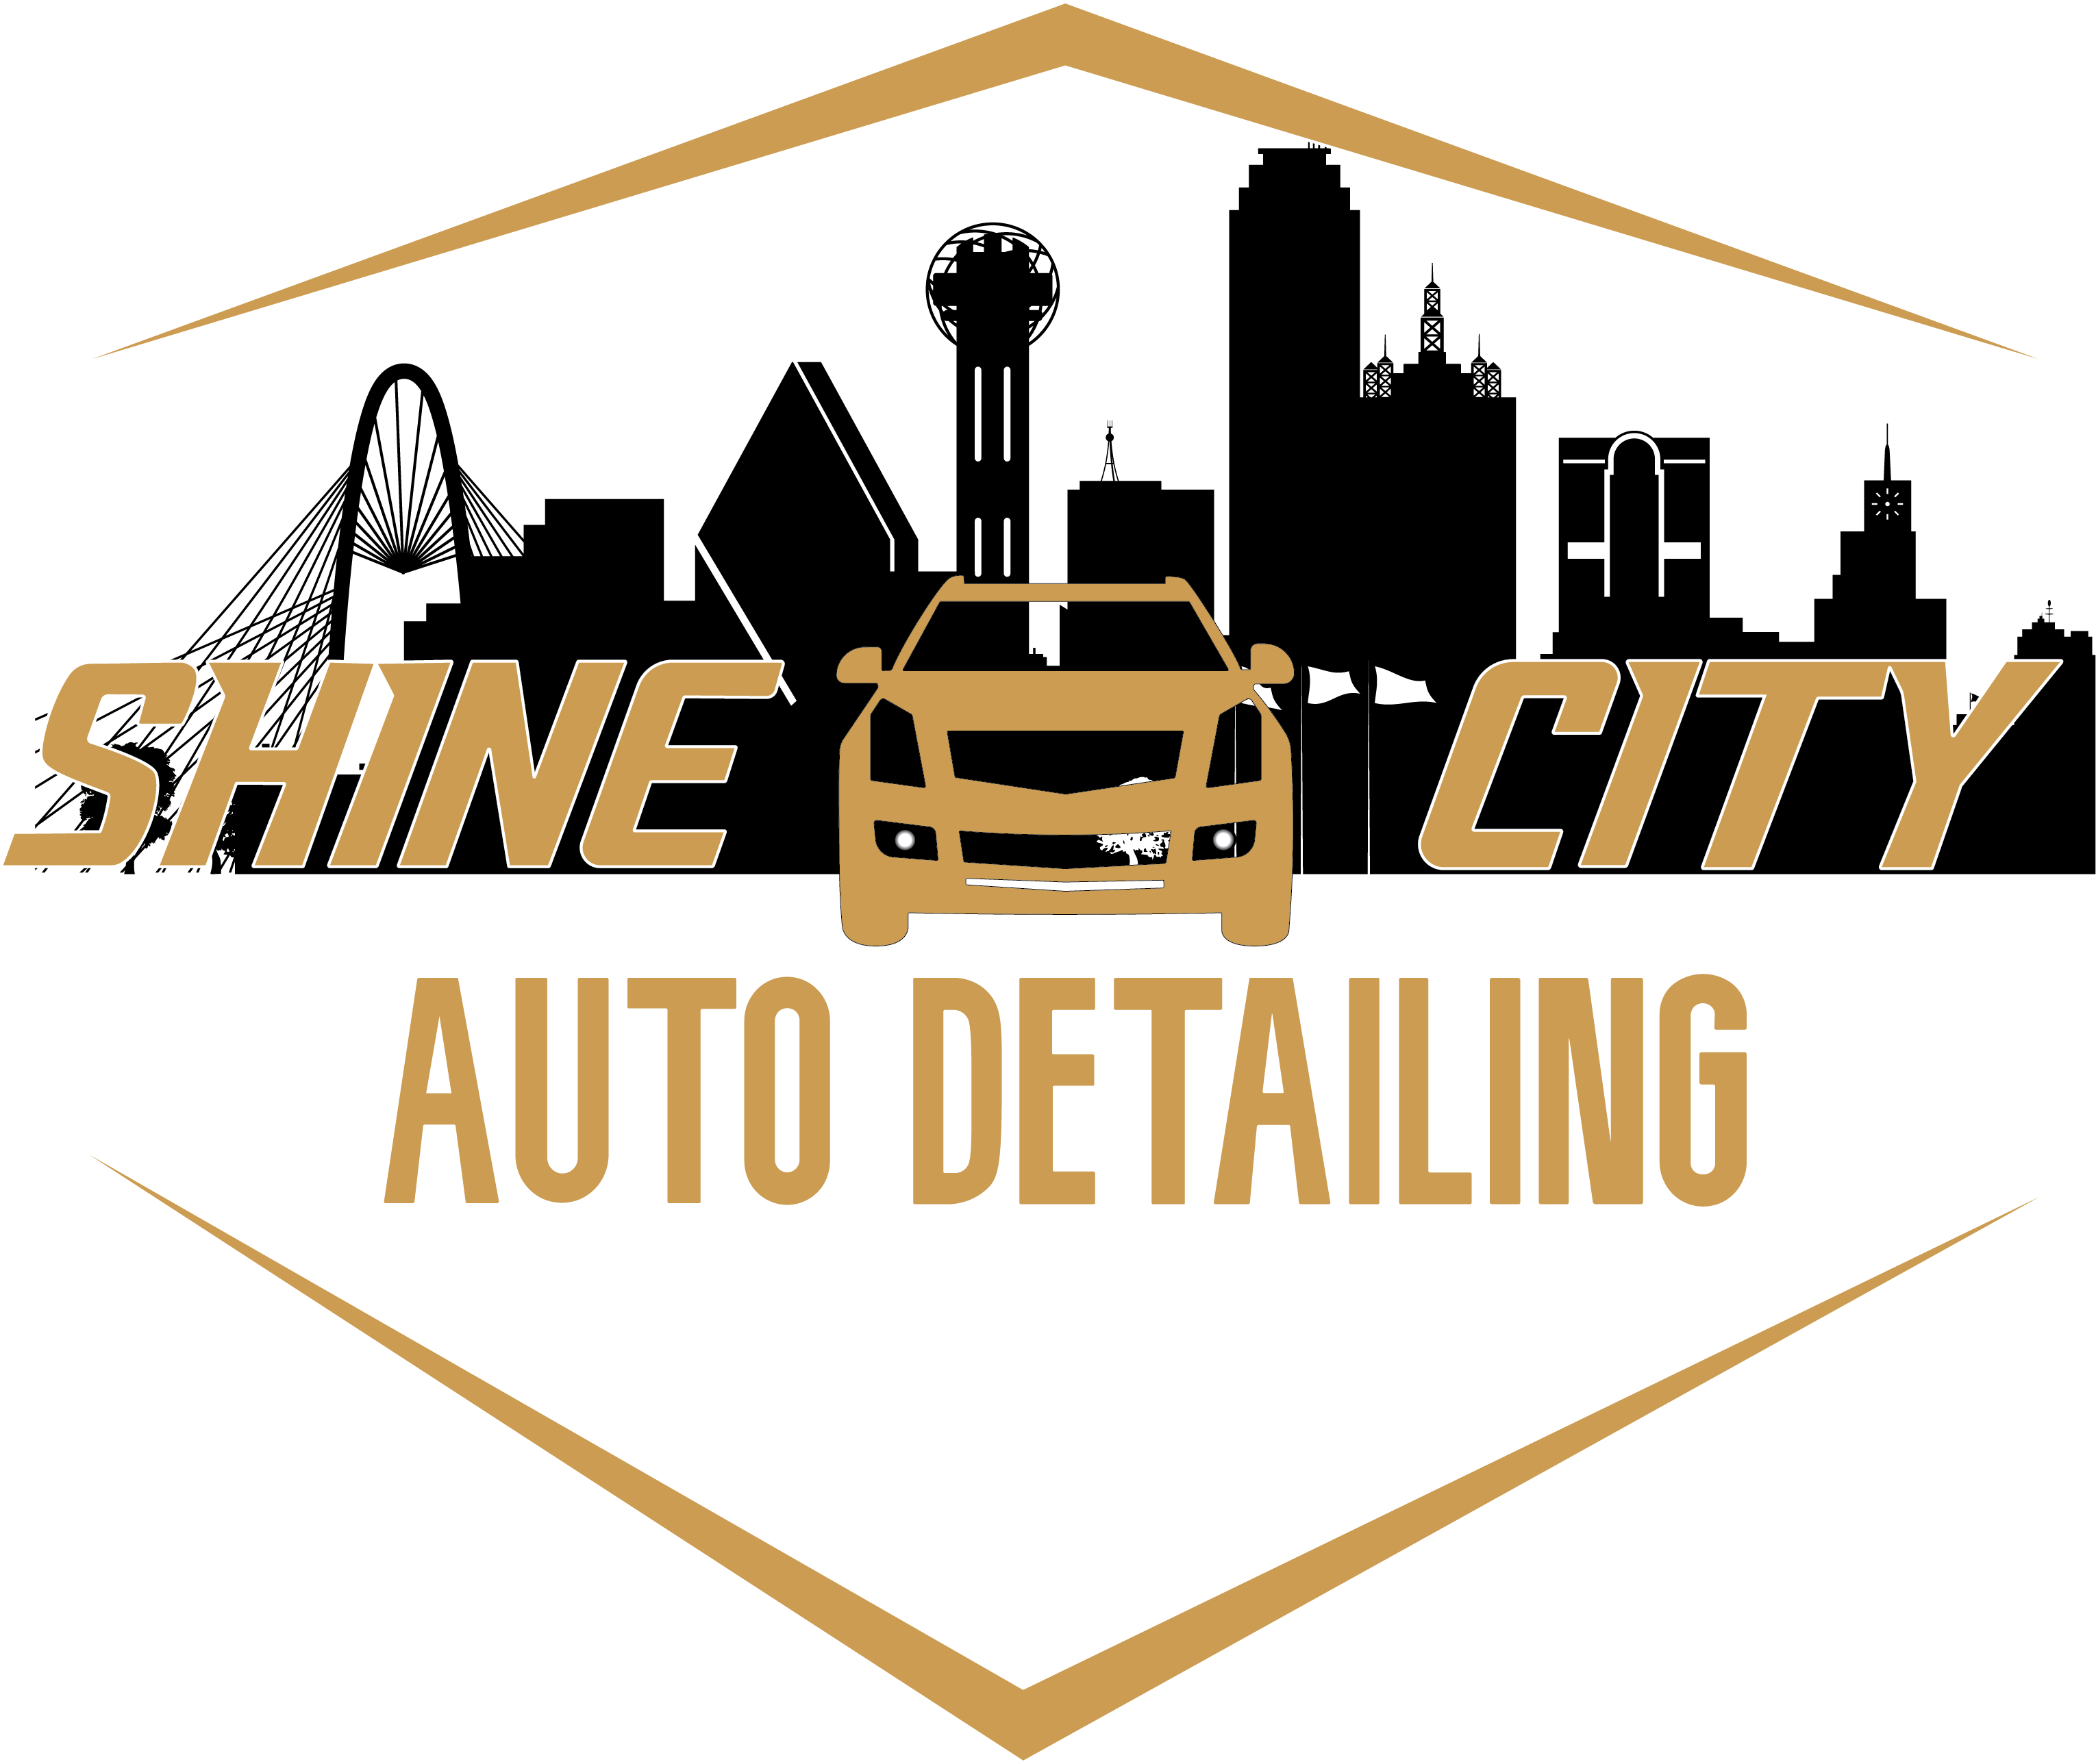 Shine City Auto Detailing